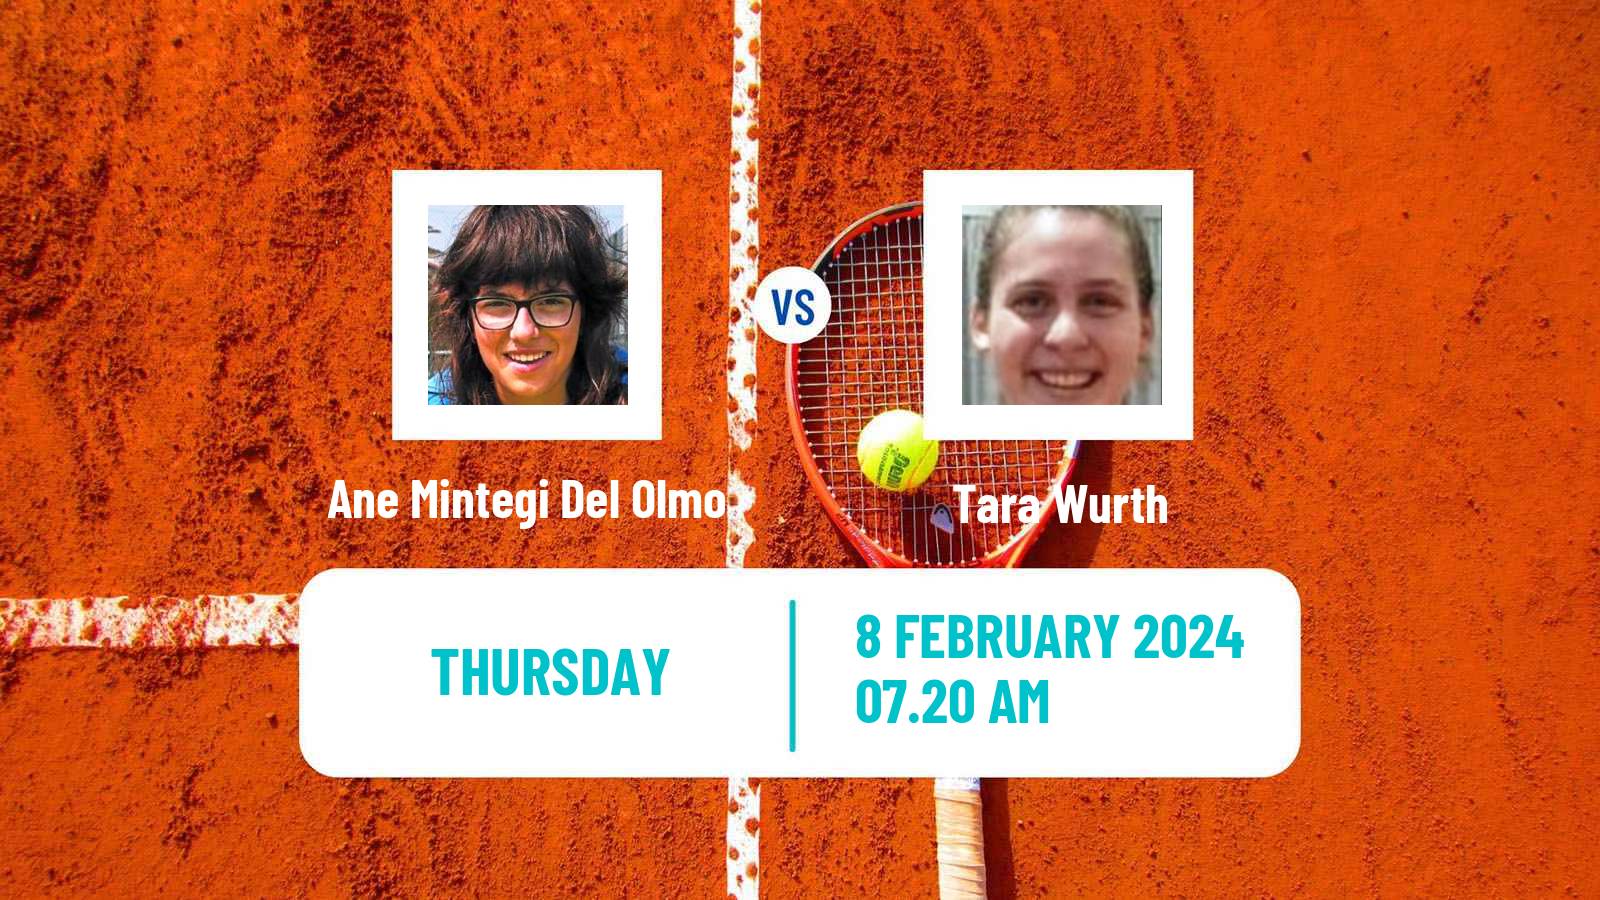 Tennis ITF W35 Antalya 2 Women Ane Mintegi Del Olmo - Tara Wurth